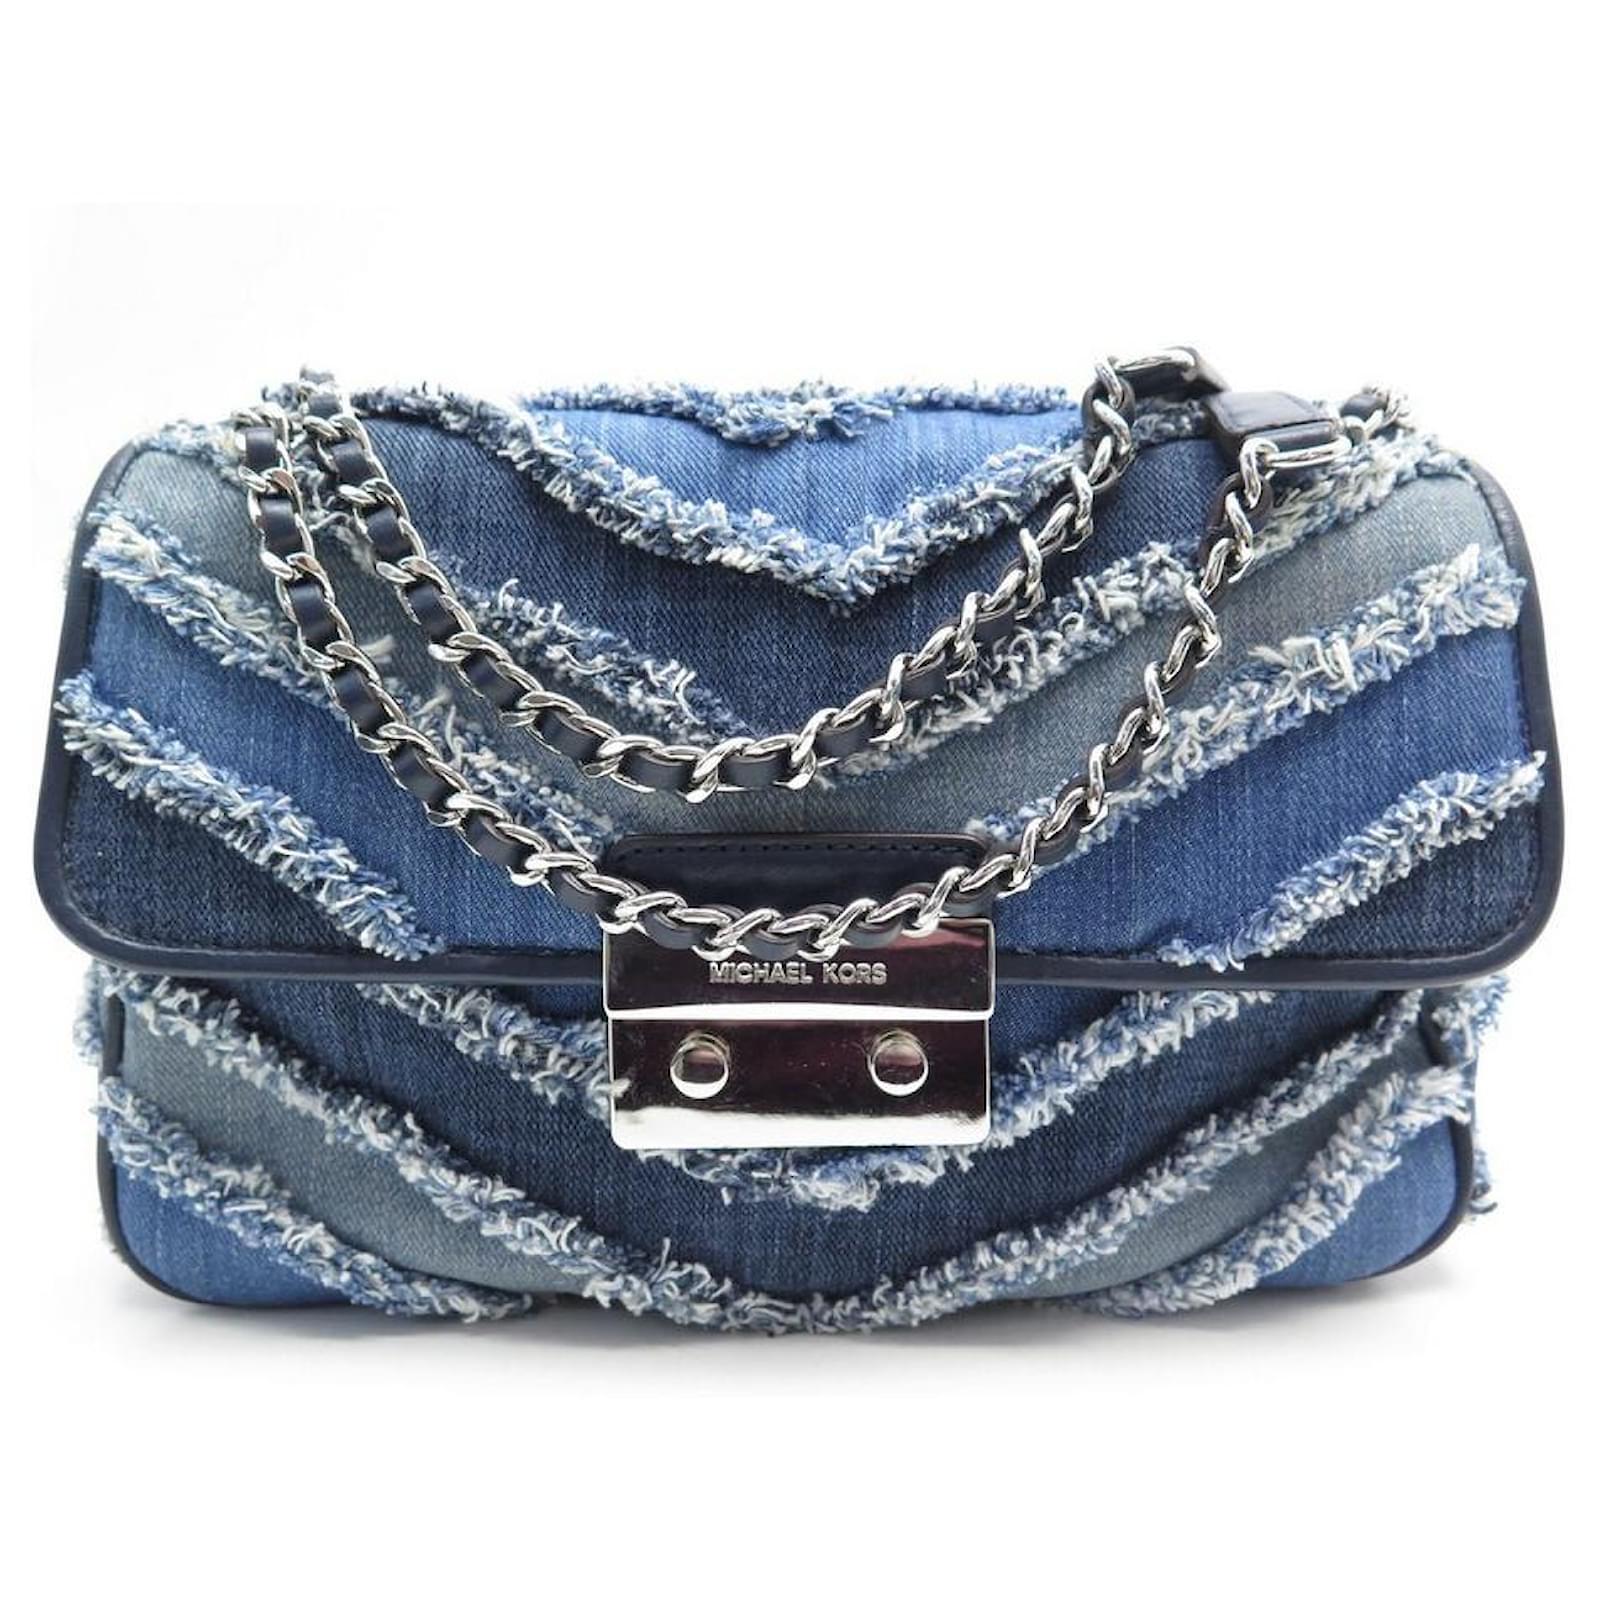 Stylish Michael Kors Denim Handbag - Limited Edition